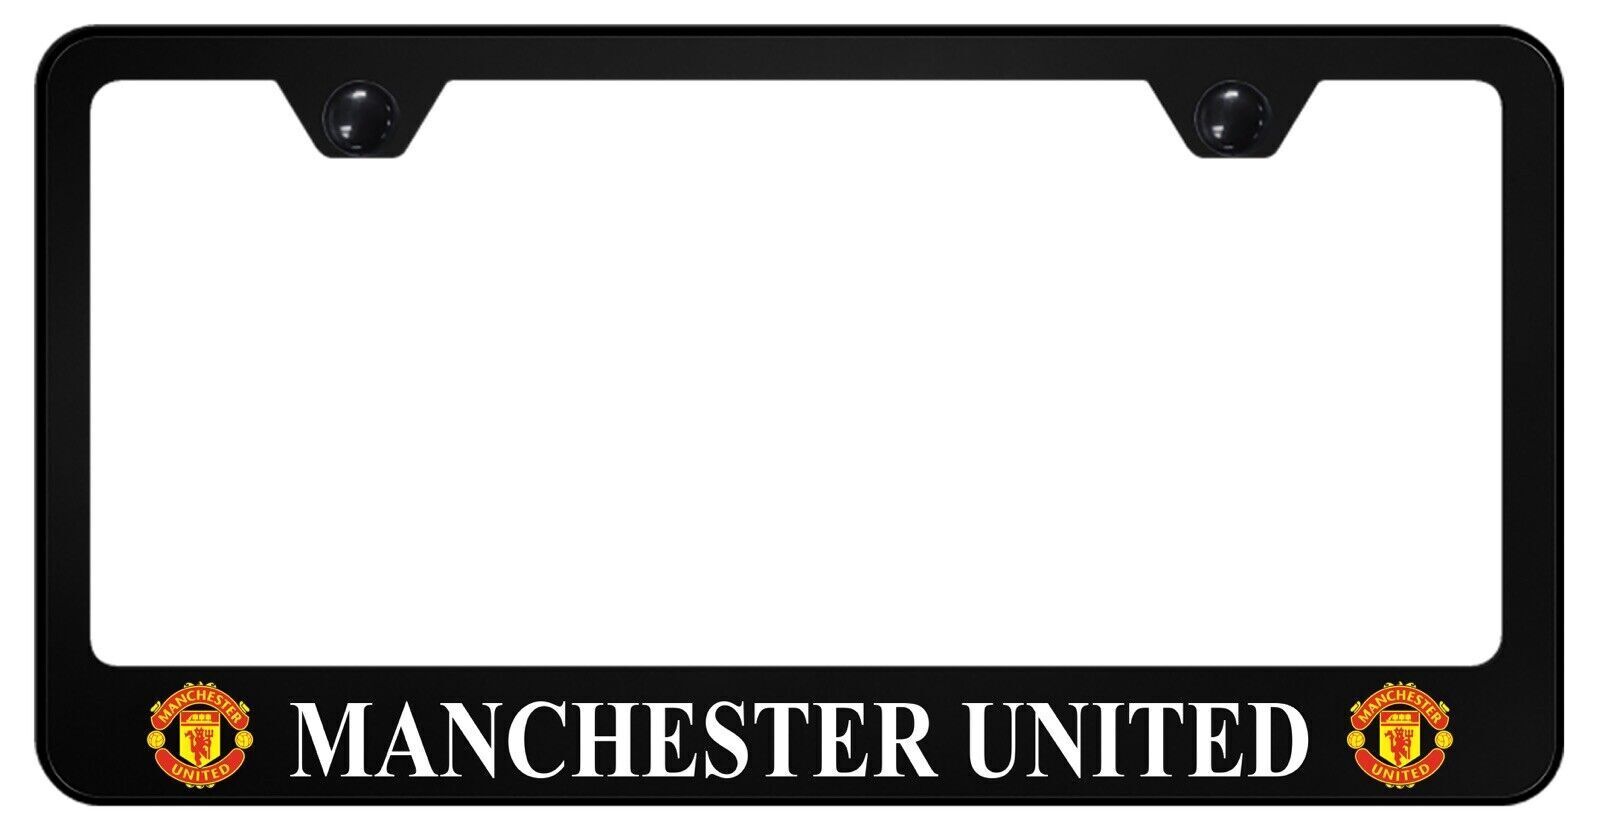 Manchester United Black Stainless Steel License Plate Frame